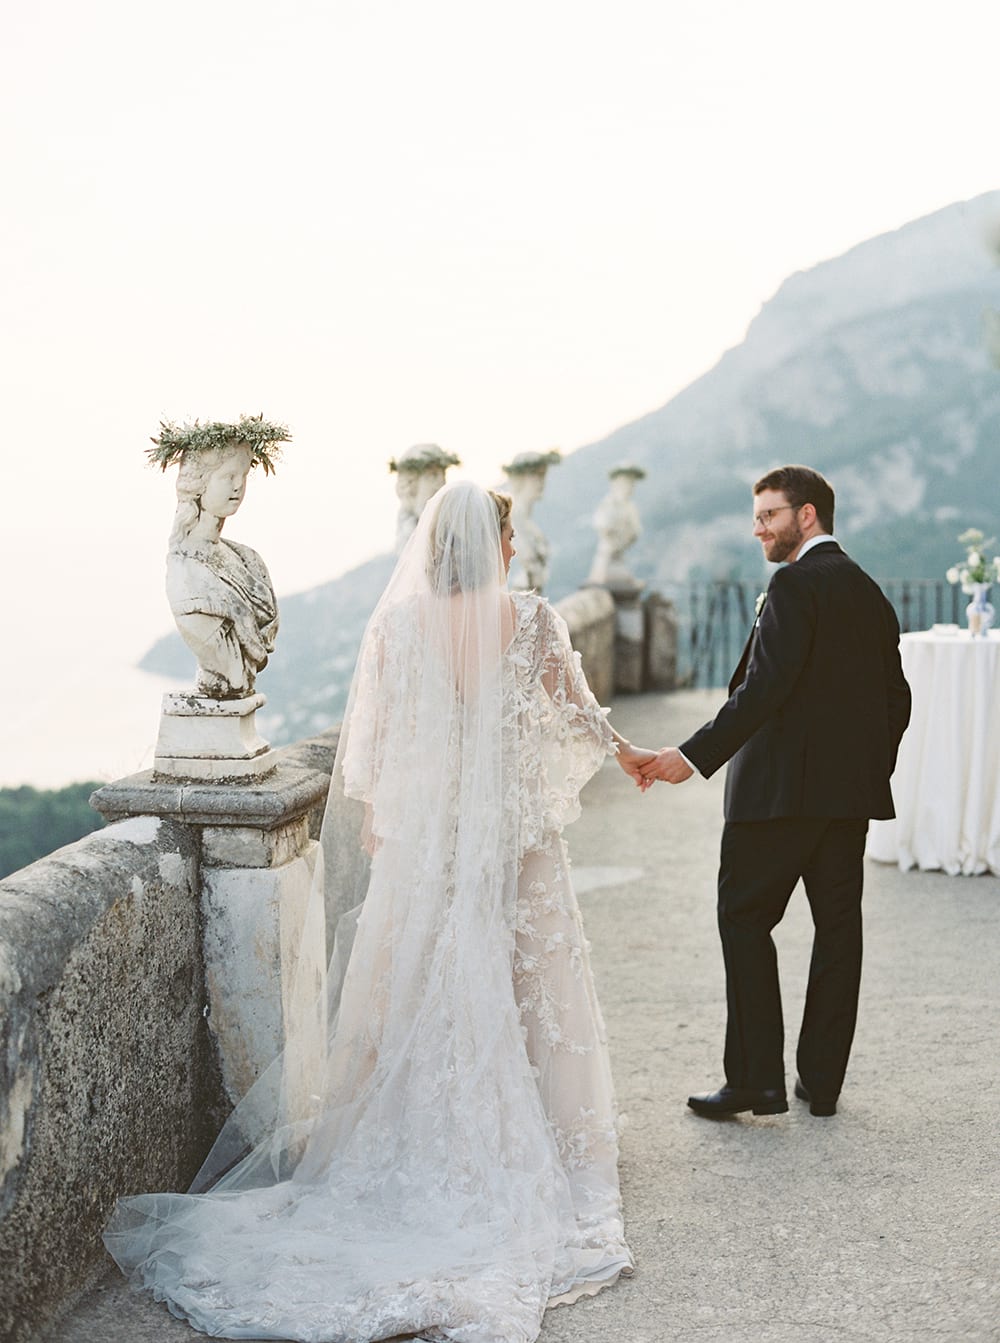 wedding villa cimbrone ravello, italy bride and groom photos on terrace of infinity